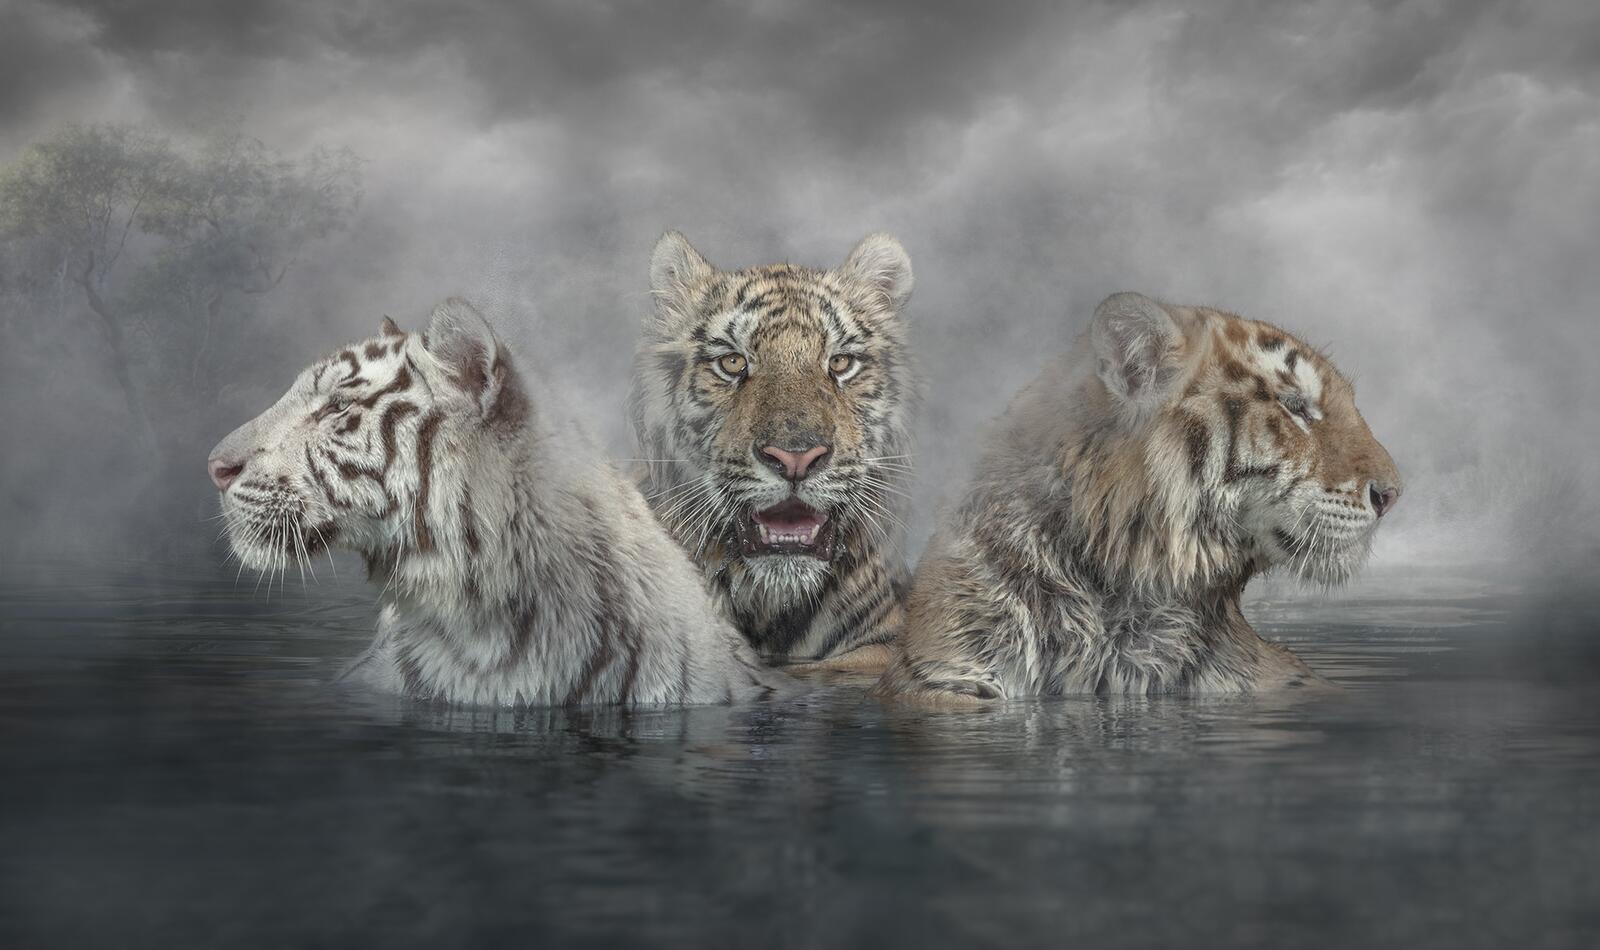 Wallpapers three art tigers on the desktop